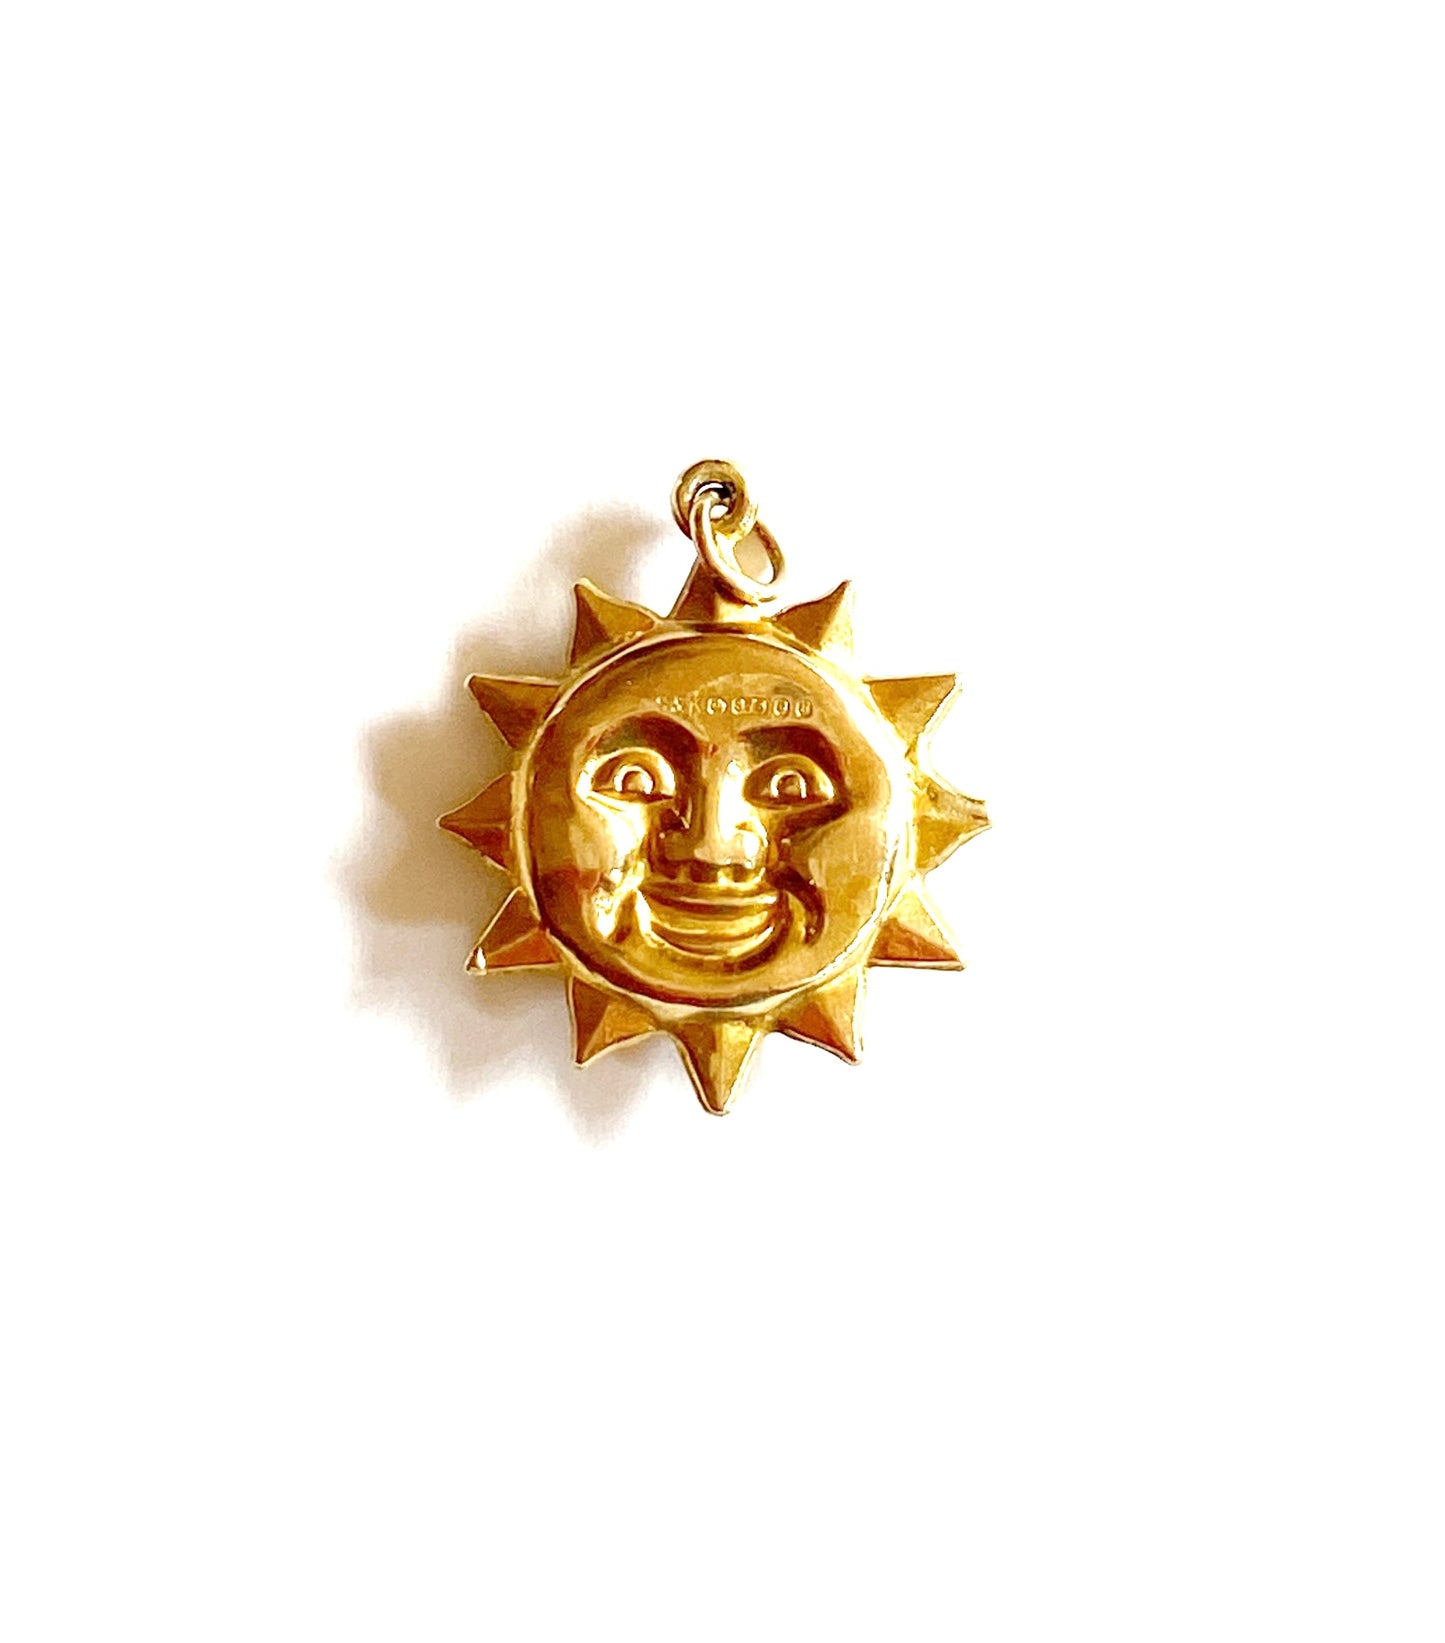 9ct 375 vintage gold sun charm